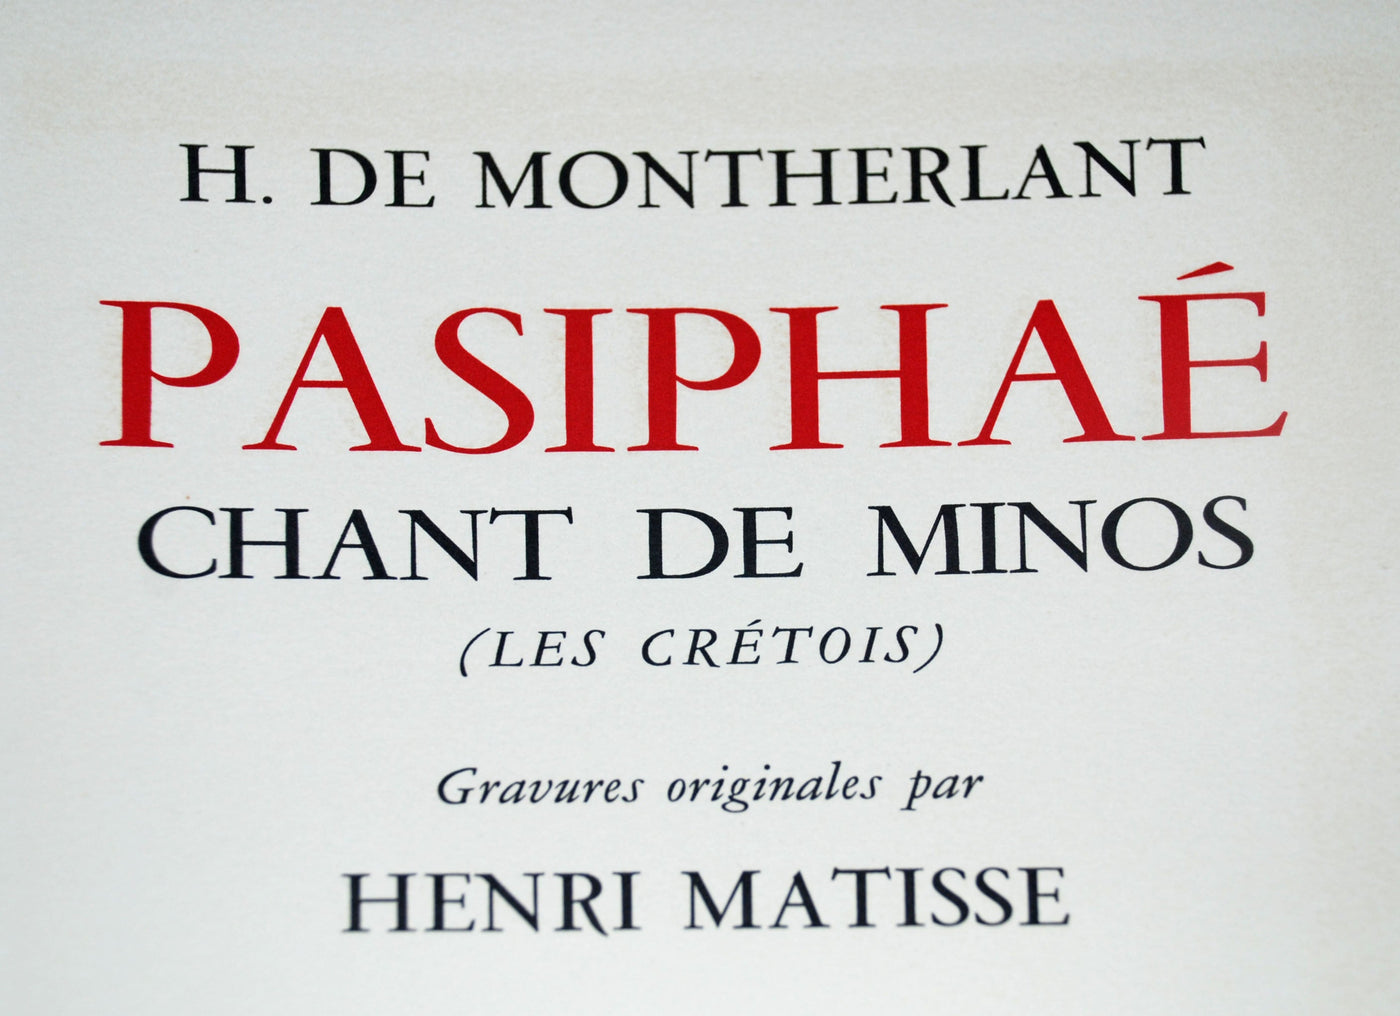 Henri Matisse Pasiphae Title Page 1944